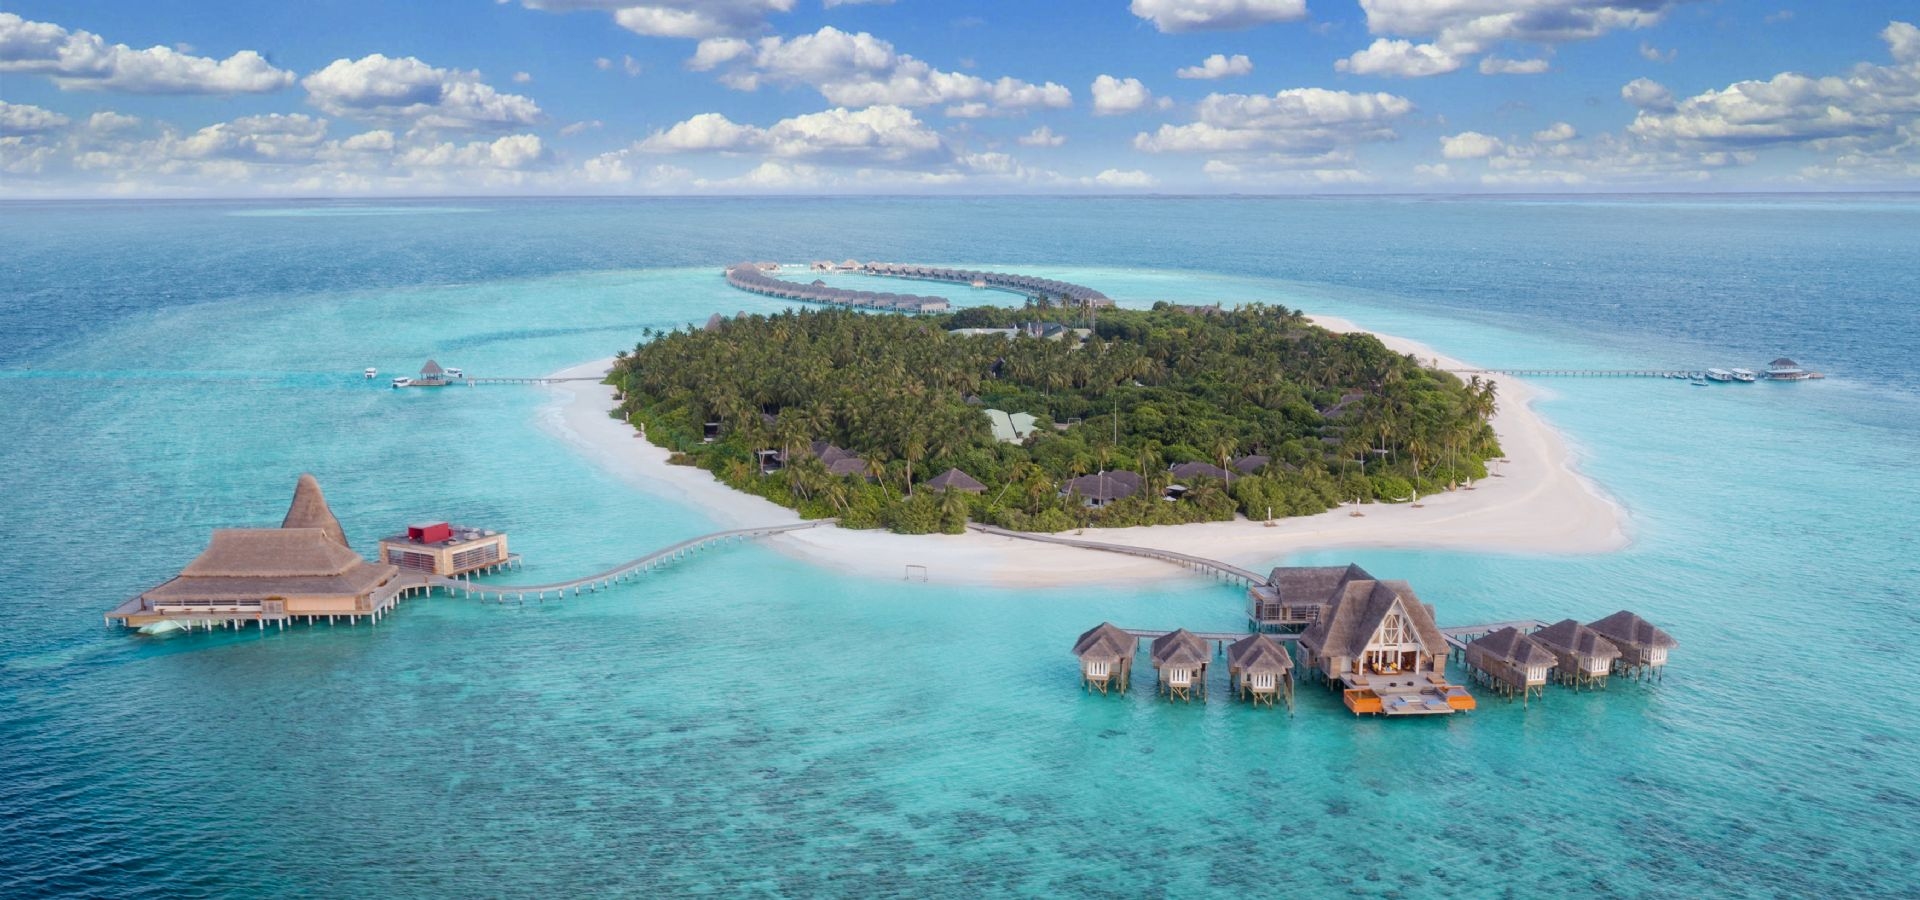 acredite <br>Maldivas<br>o paraíso existe